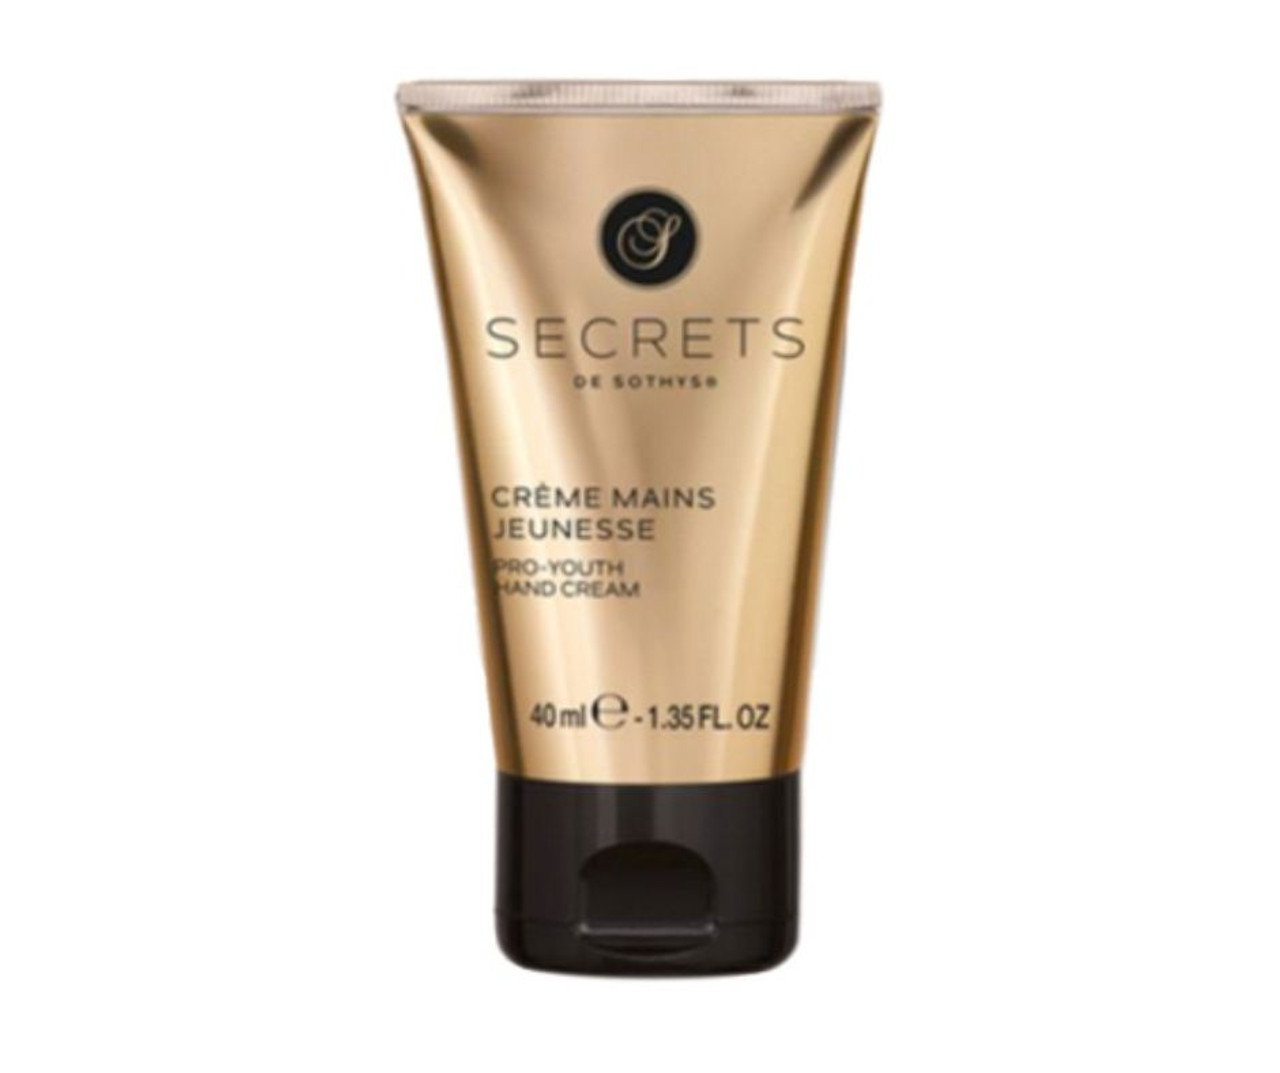 Sothys Perfume  Secrets Pro Youth Hand Cream - 1.35 oz